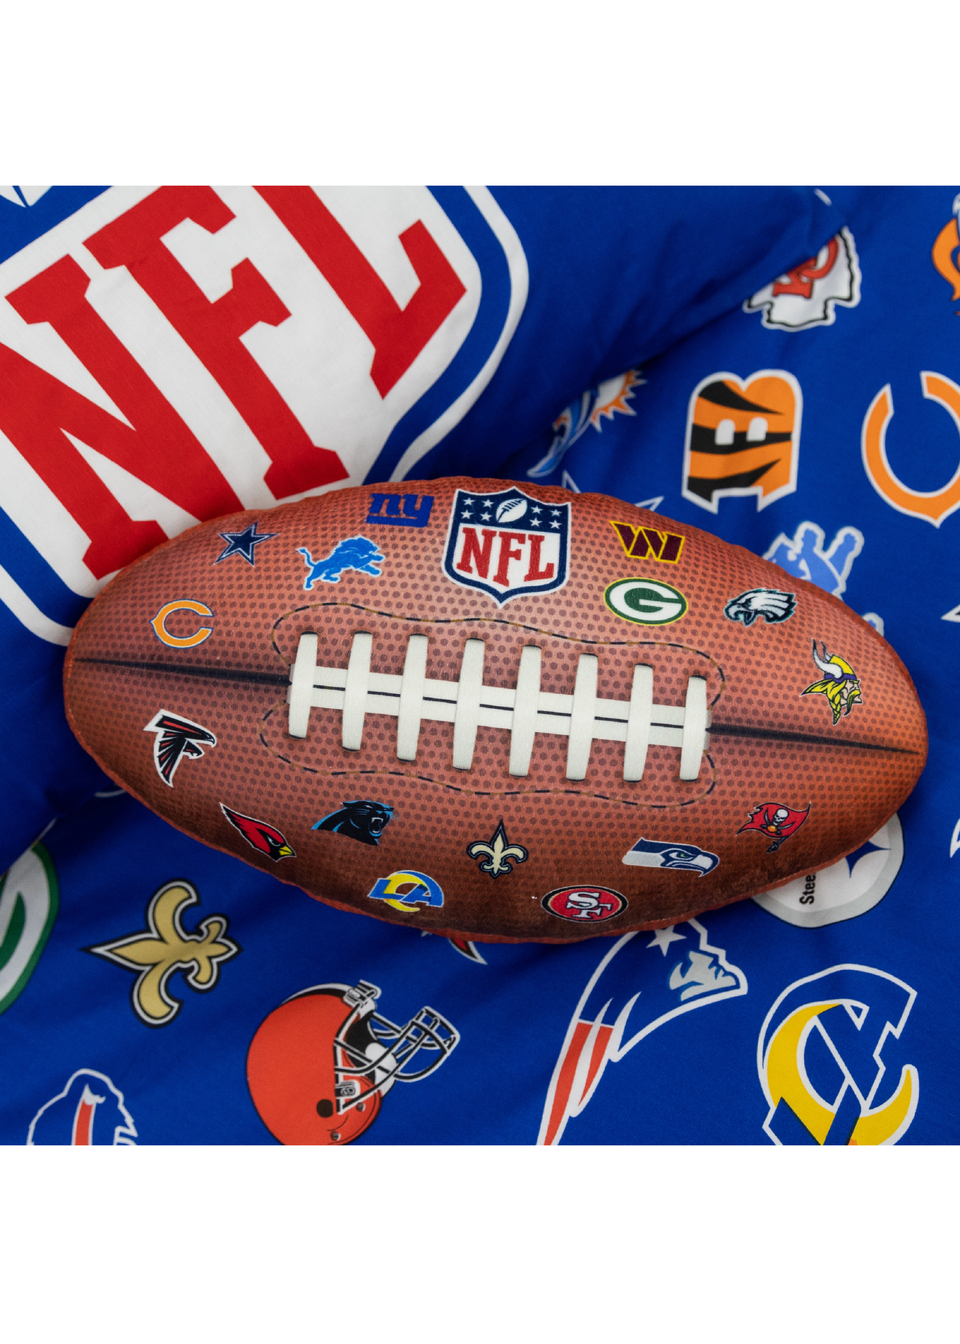 NFL Oval Shaped Cushion (40cm x 28cm)